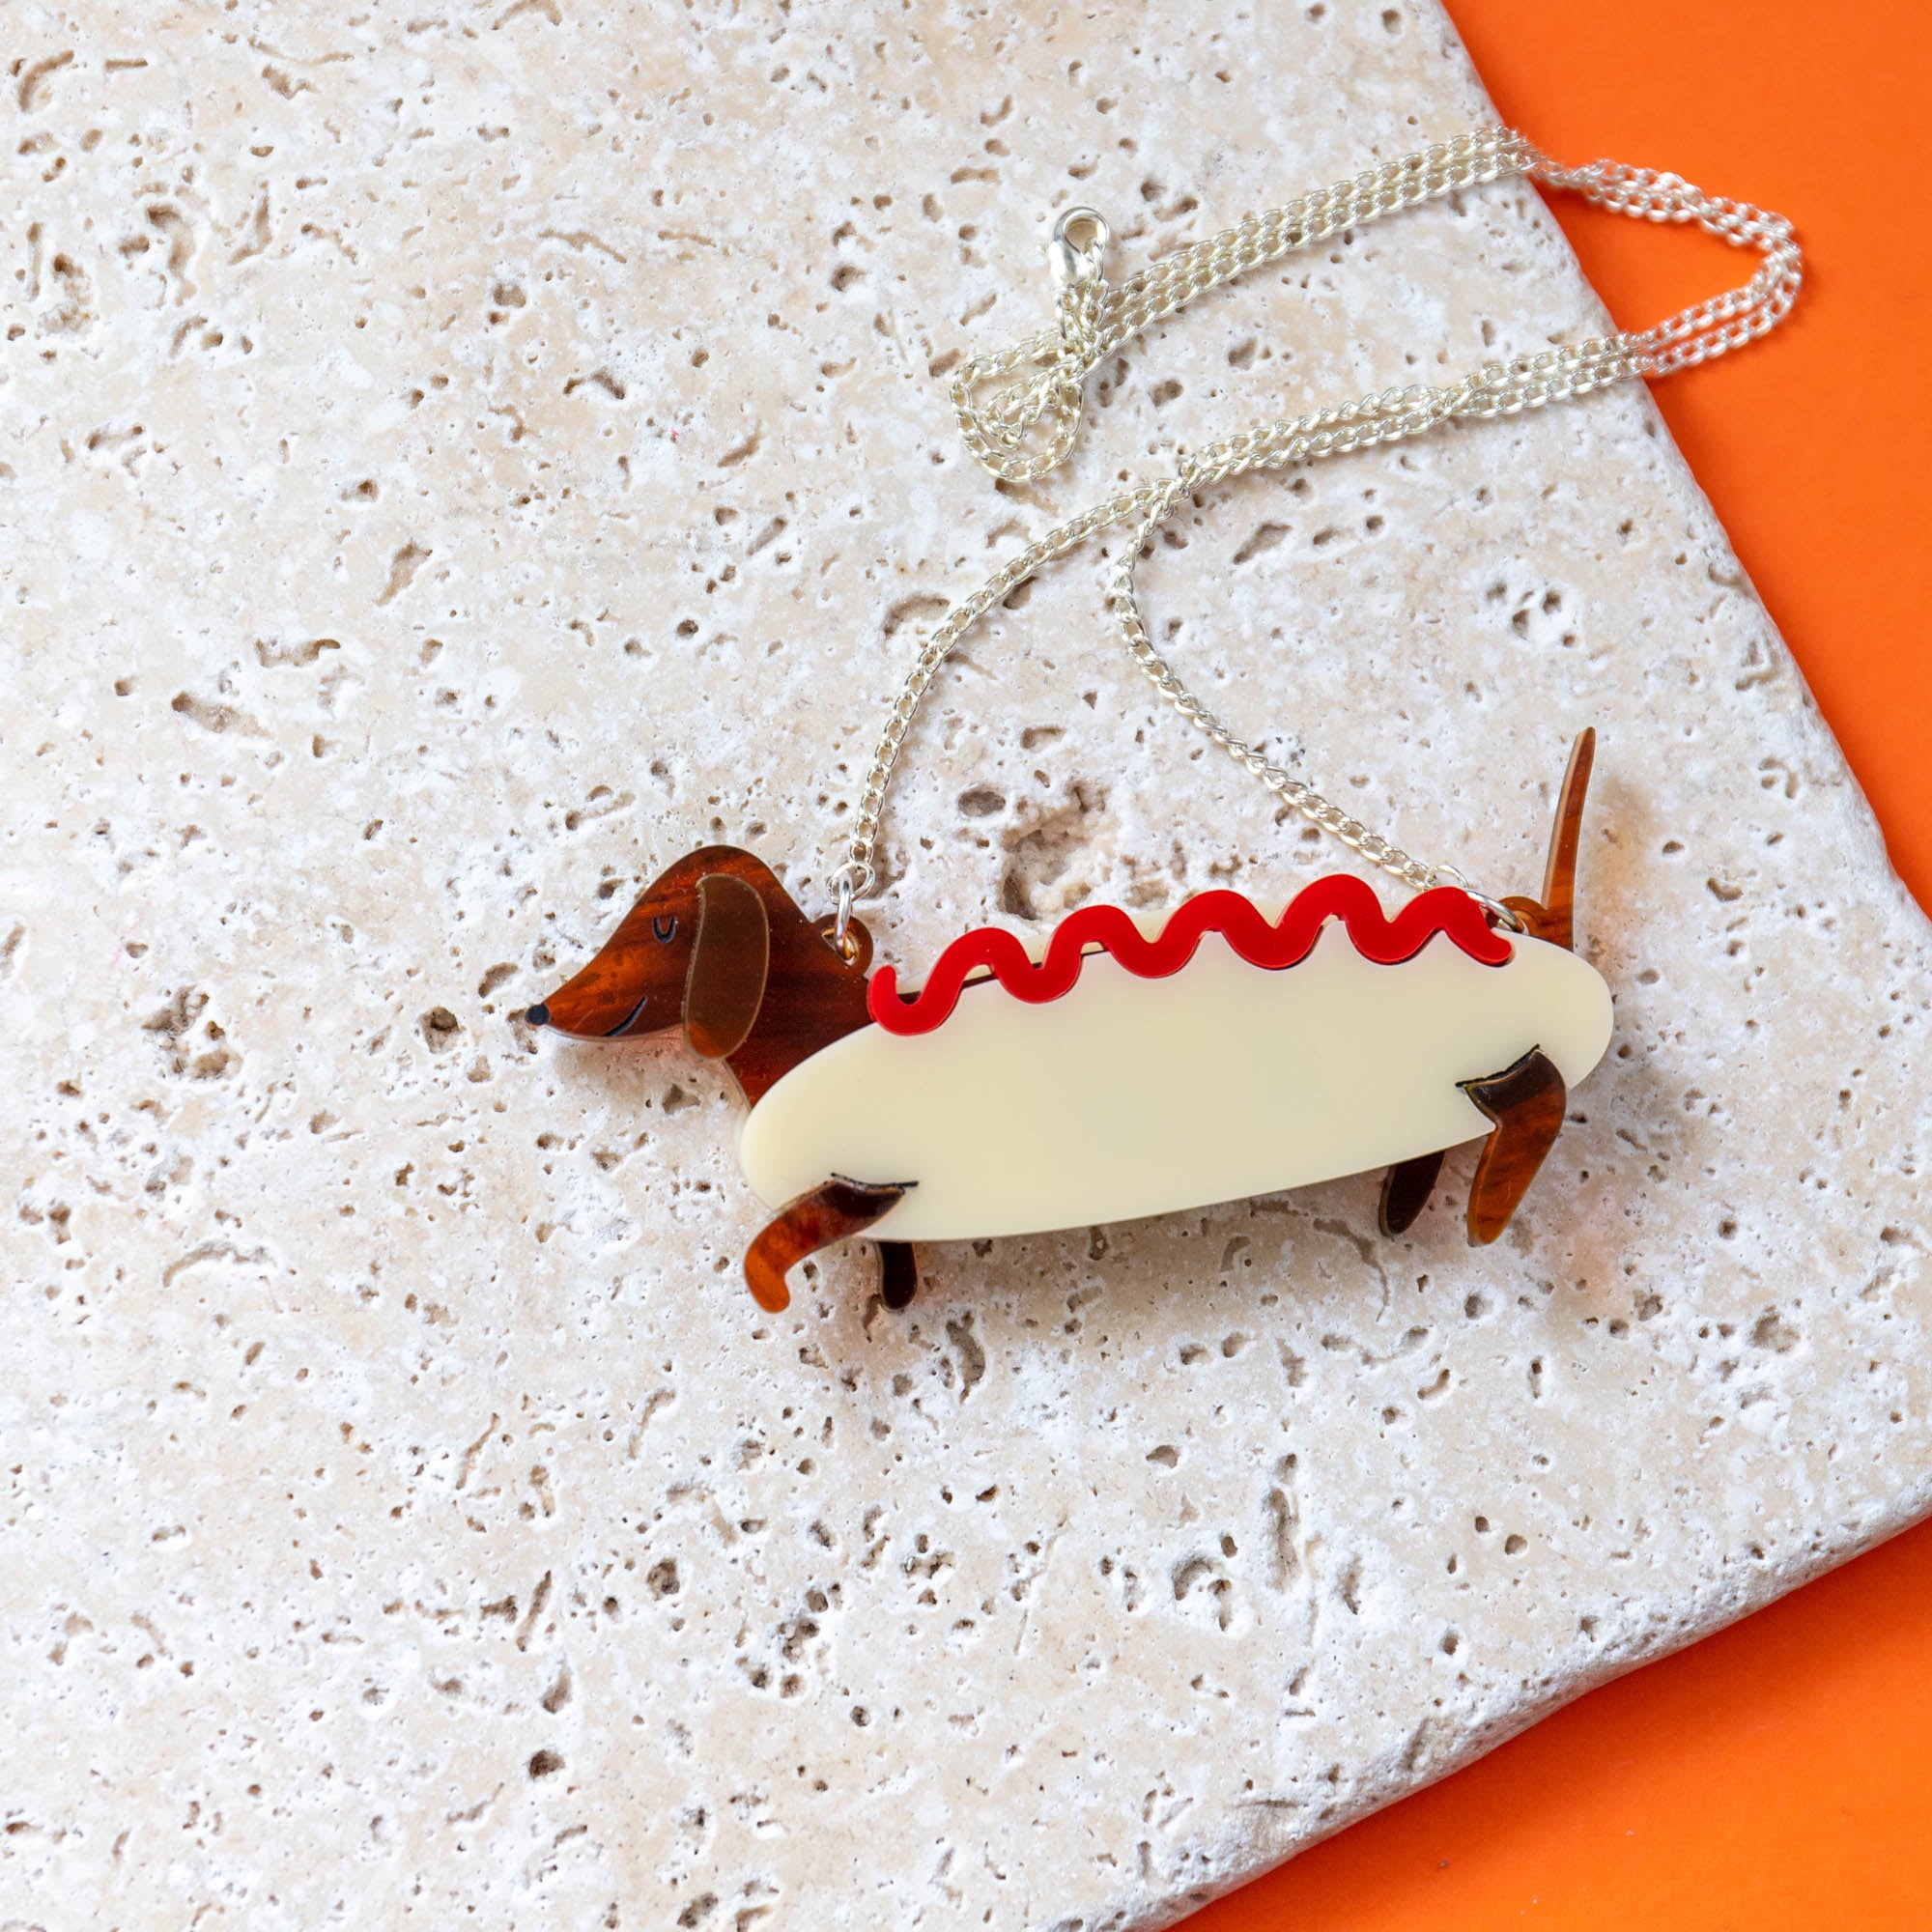 Dachshund Hot Dog Costume Necklace - Finest Imaginary